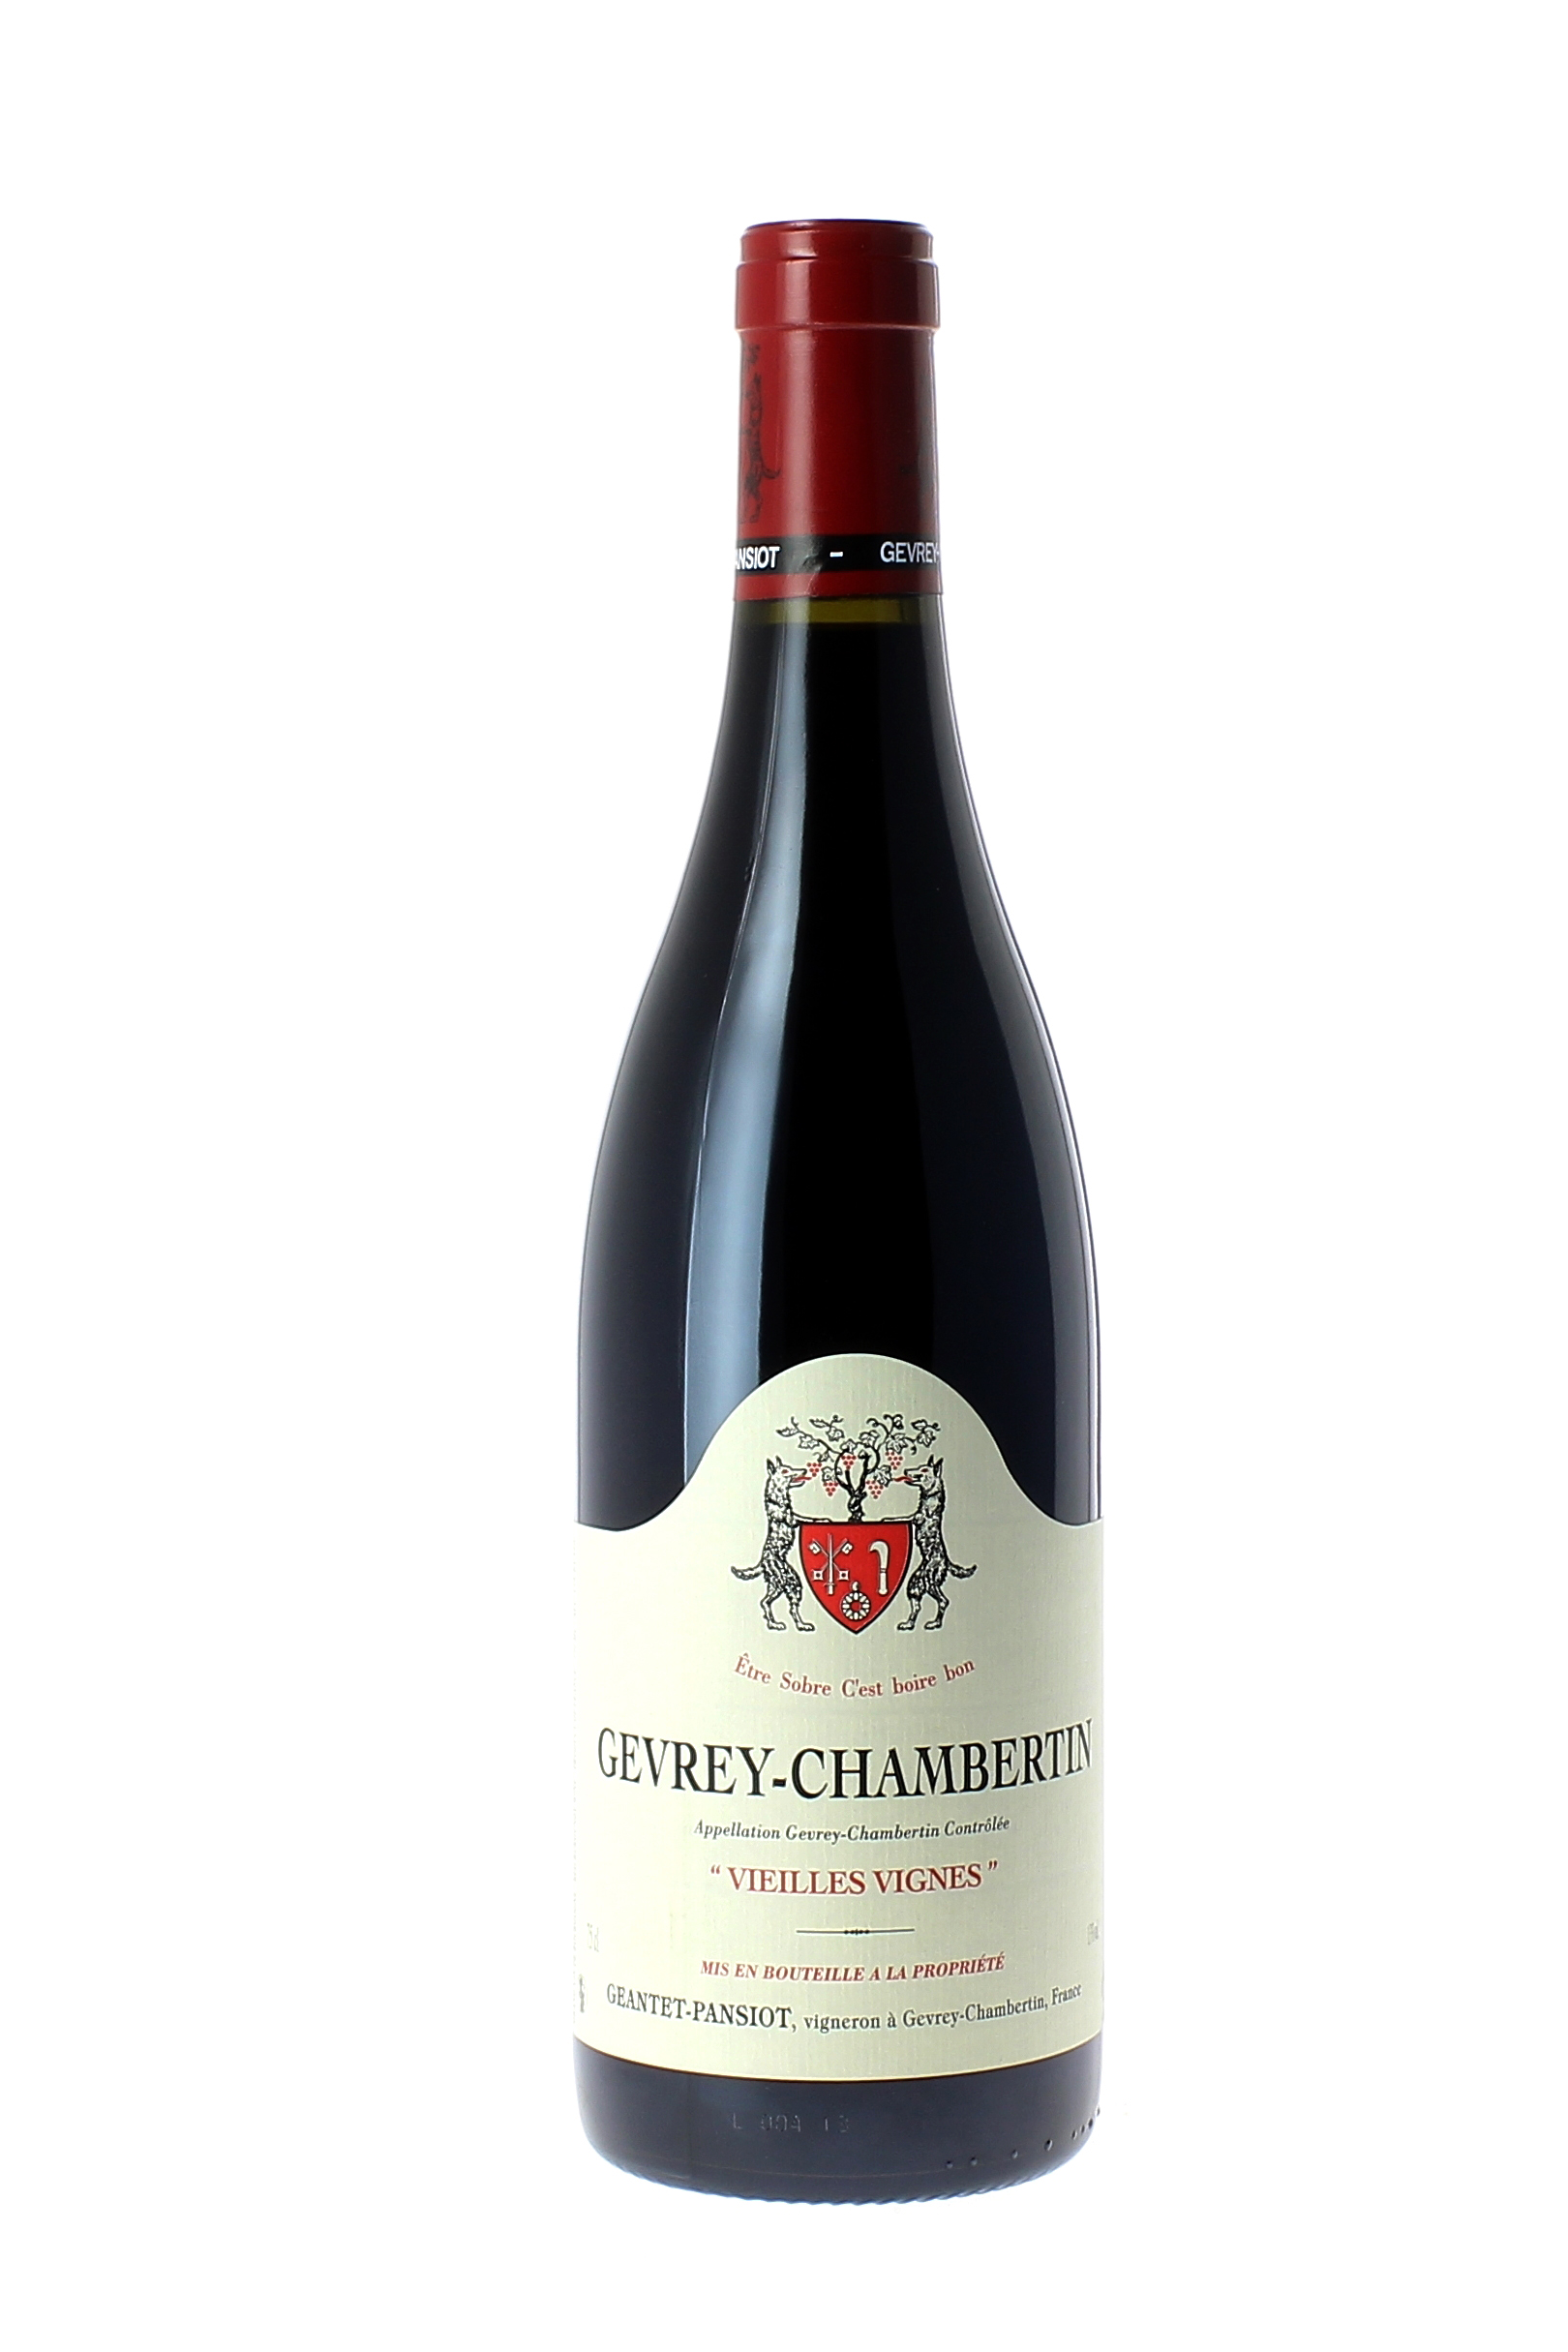 Gevrey chambertin vieilles vignes 2013 Domaine GEANTET PANSIOT, Bourgogne rouge